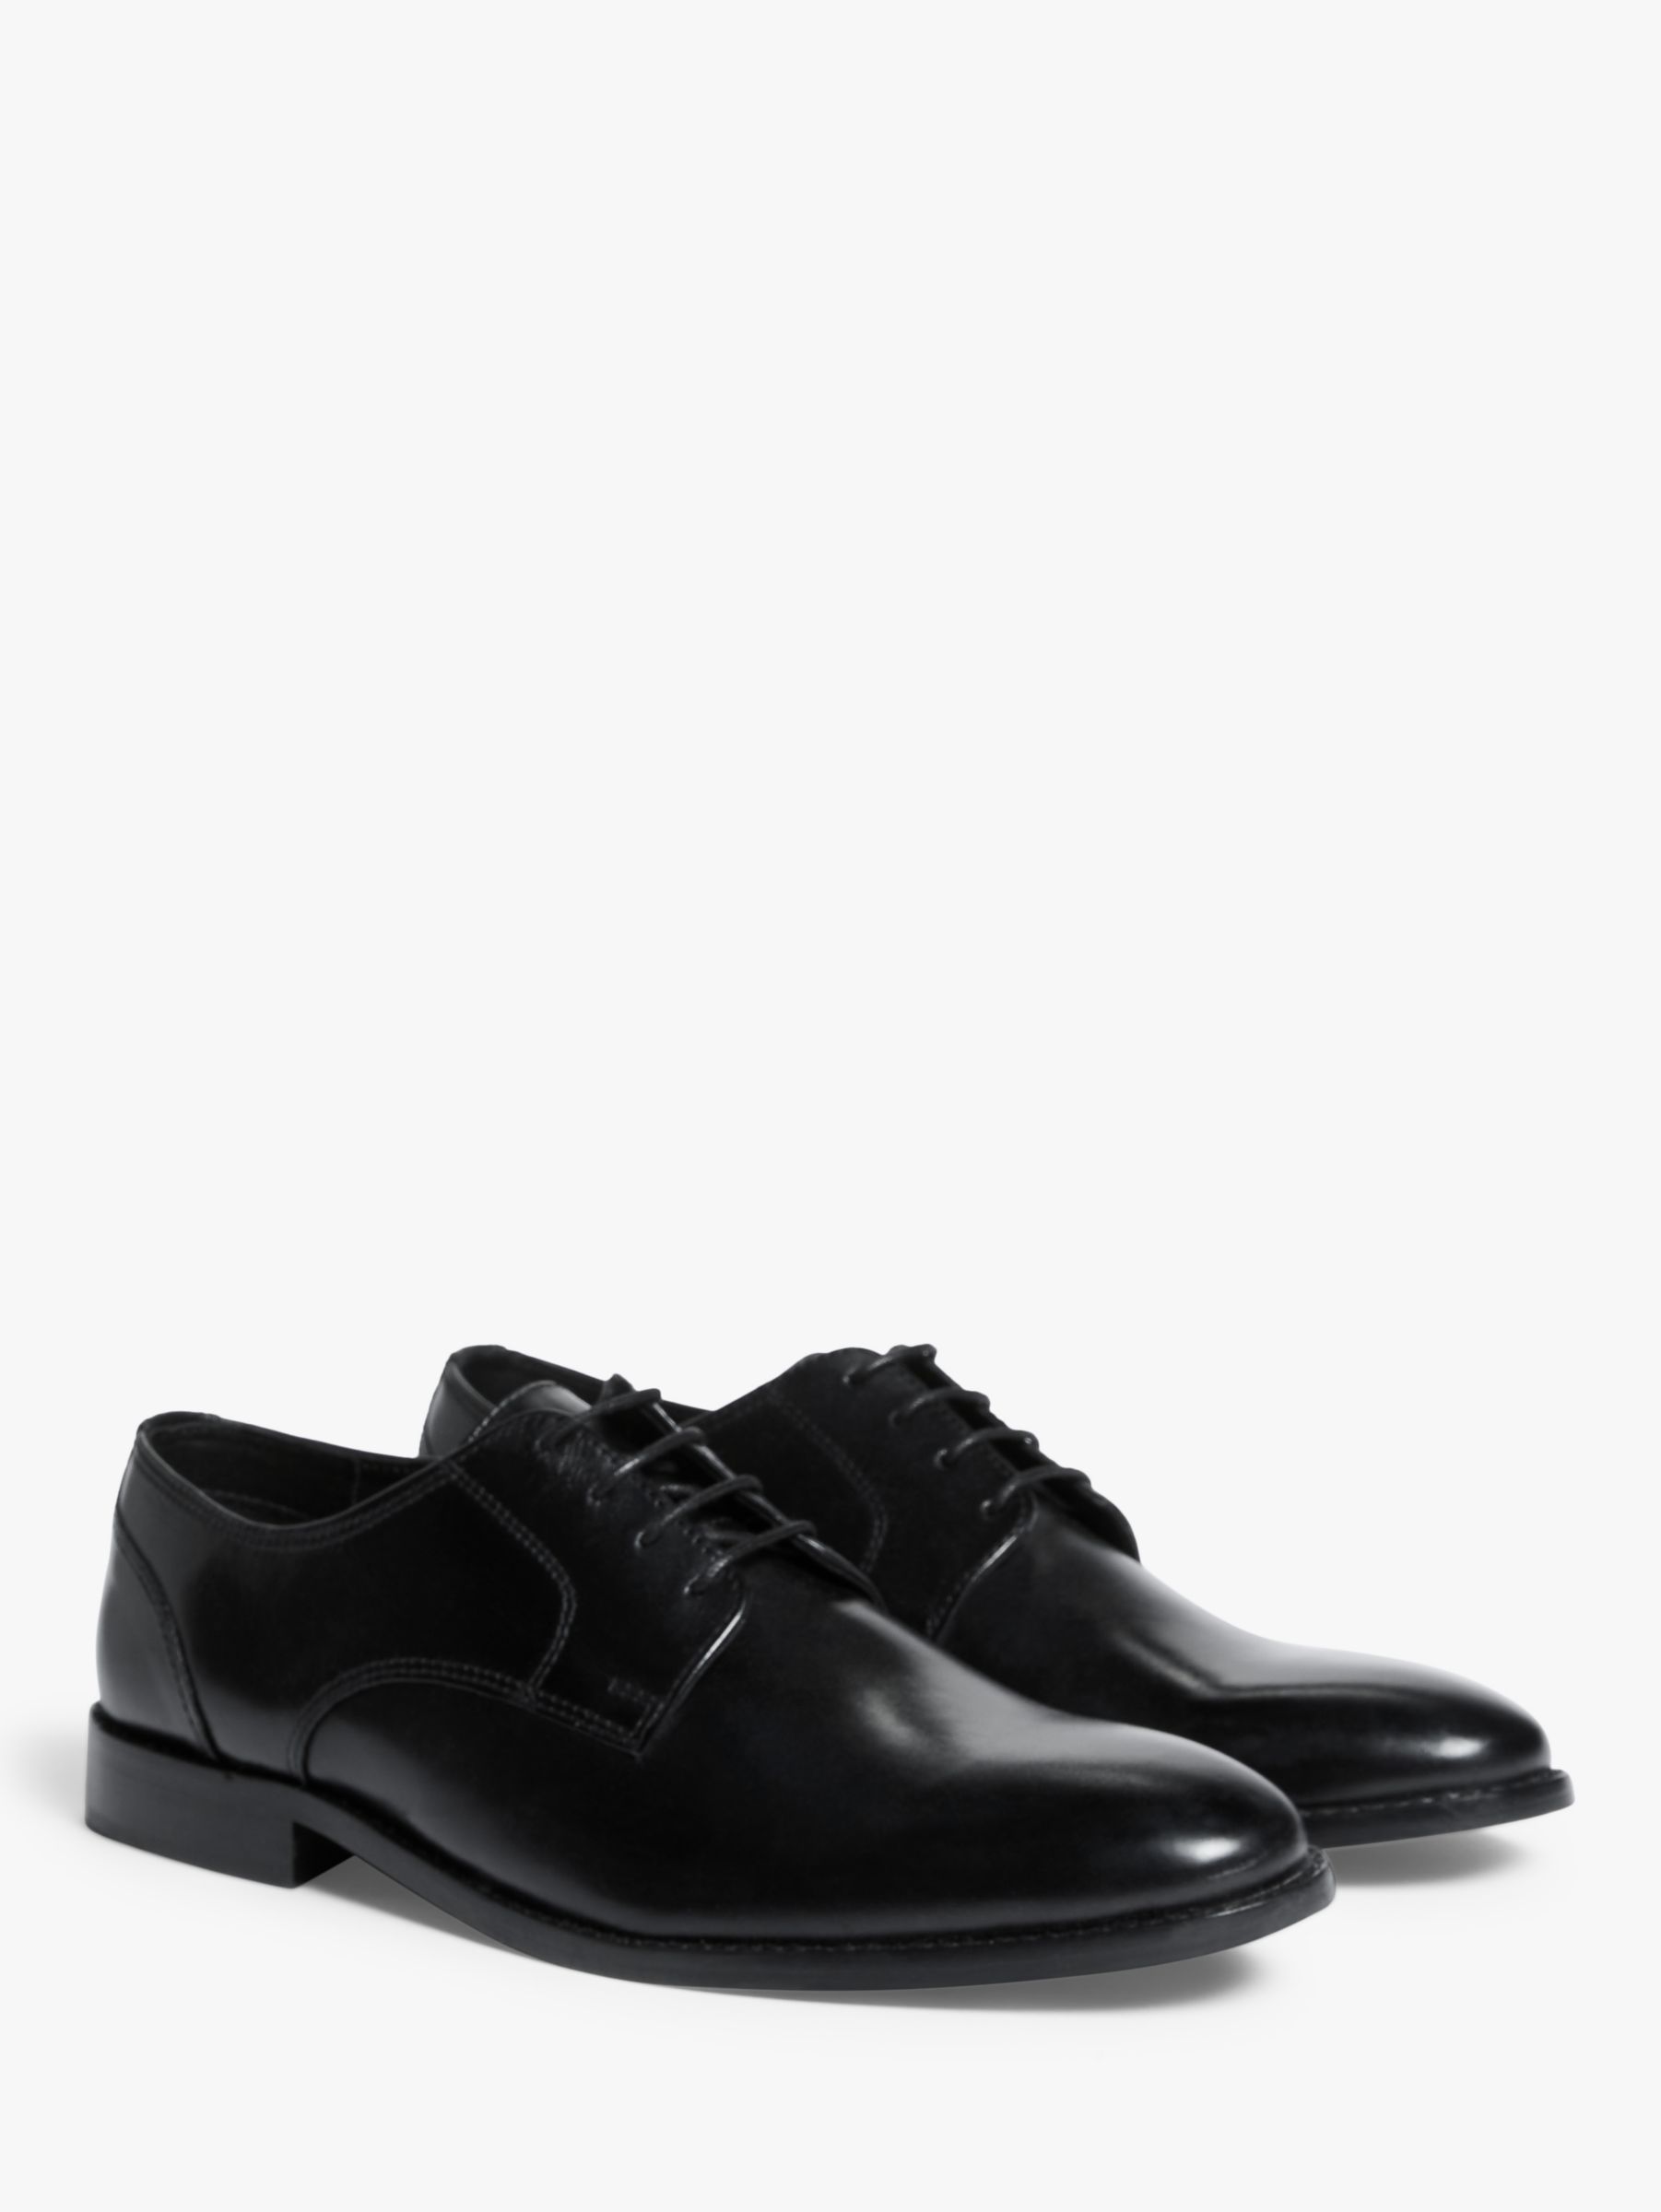 John Lewis Slim Derby Shoes, Black at John Lewis & Partners